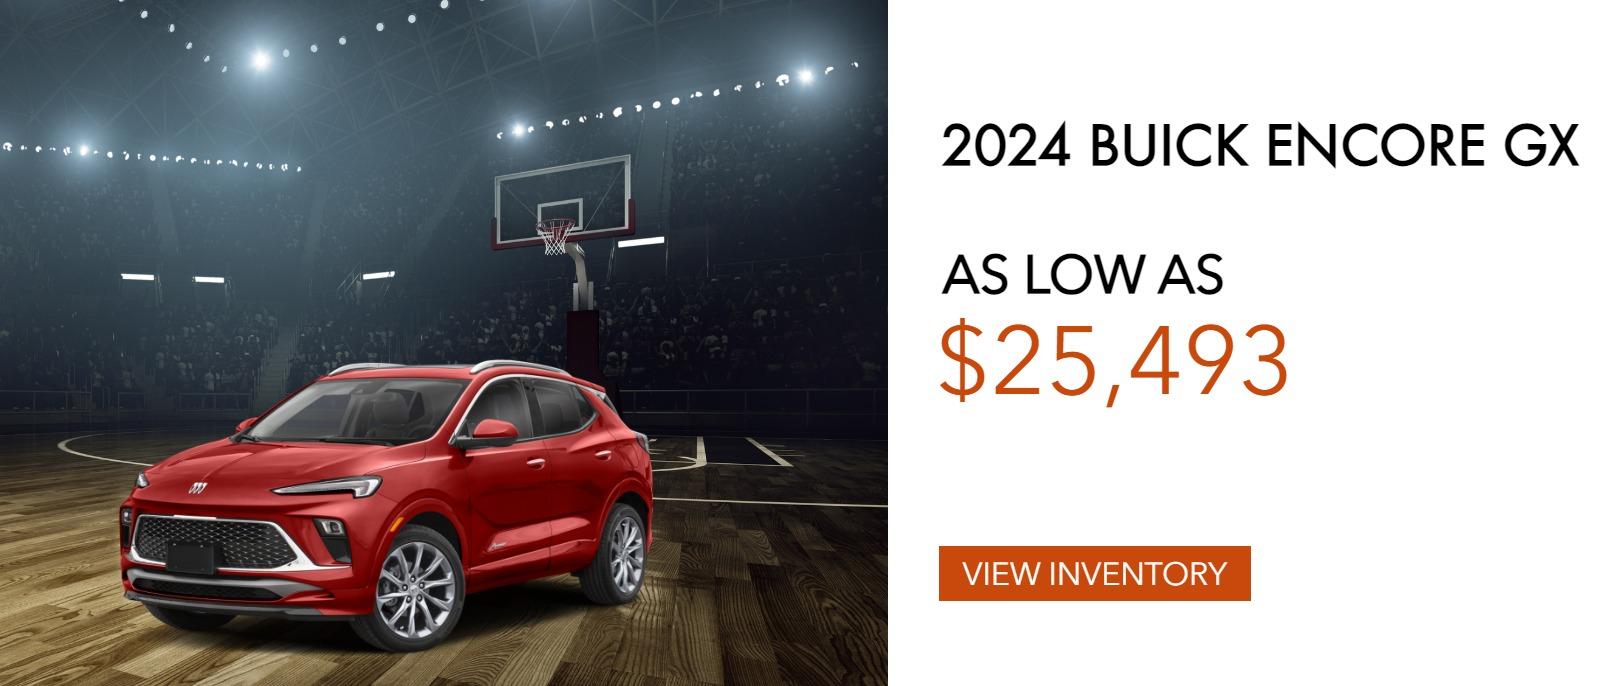 2024 Buick Encore GX as low as $25,493